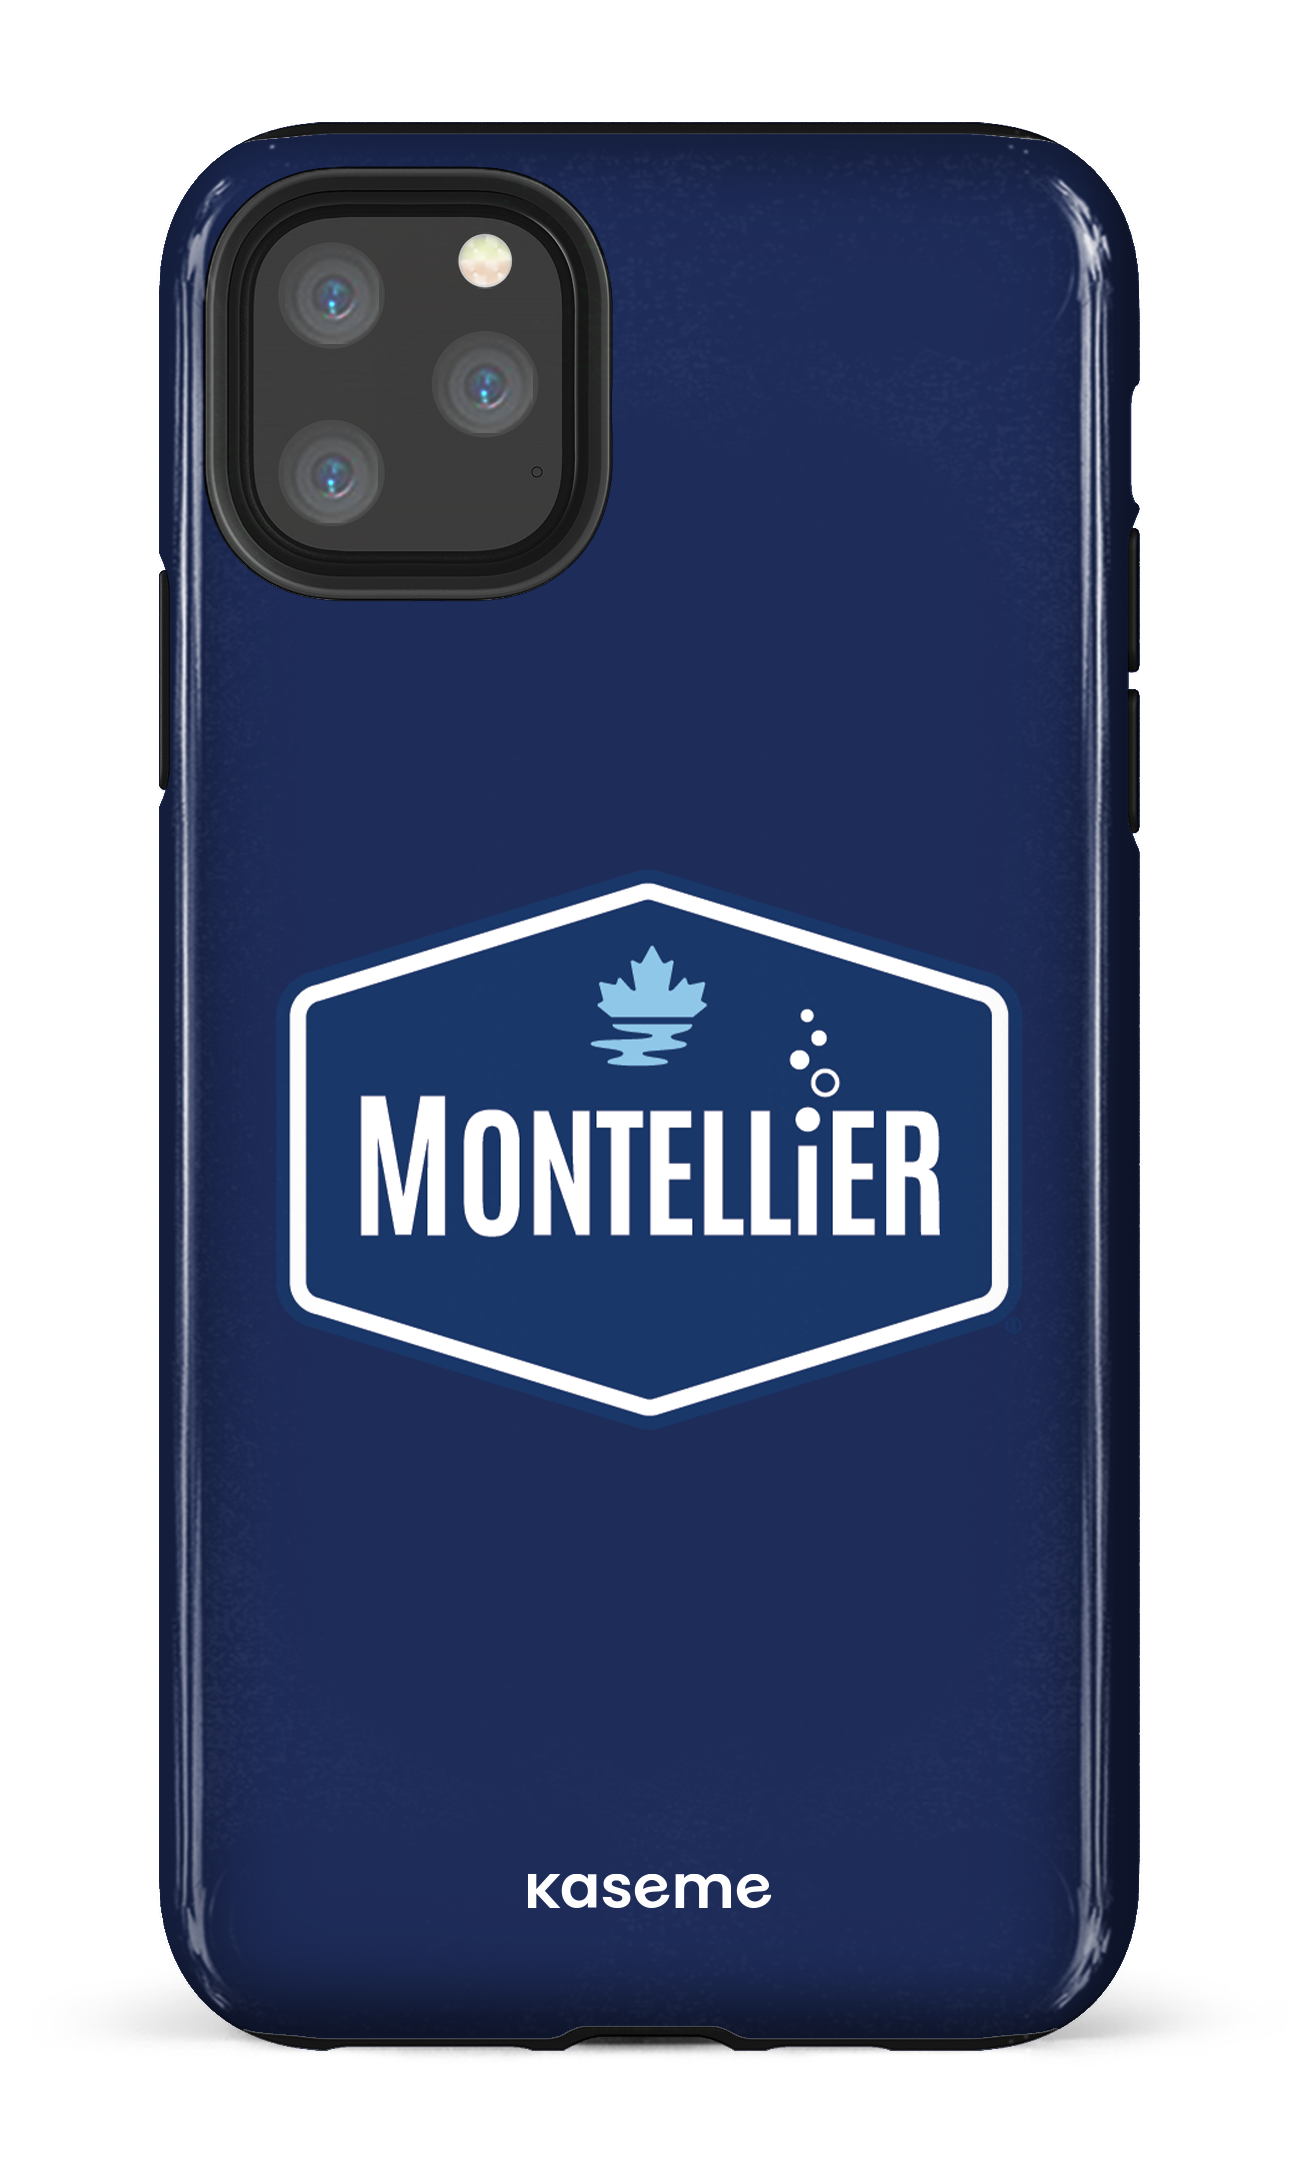 Montellier - iPhone 11 Pro Max